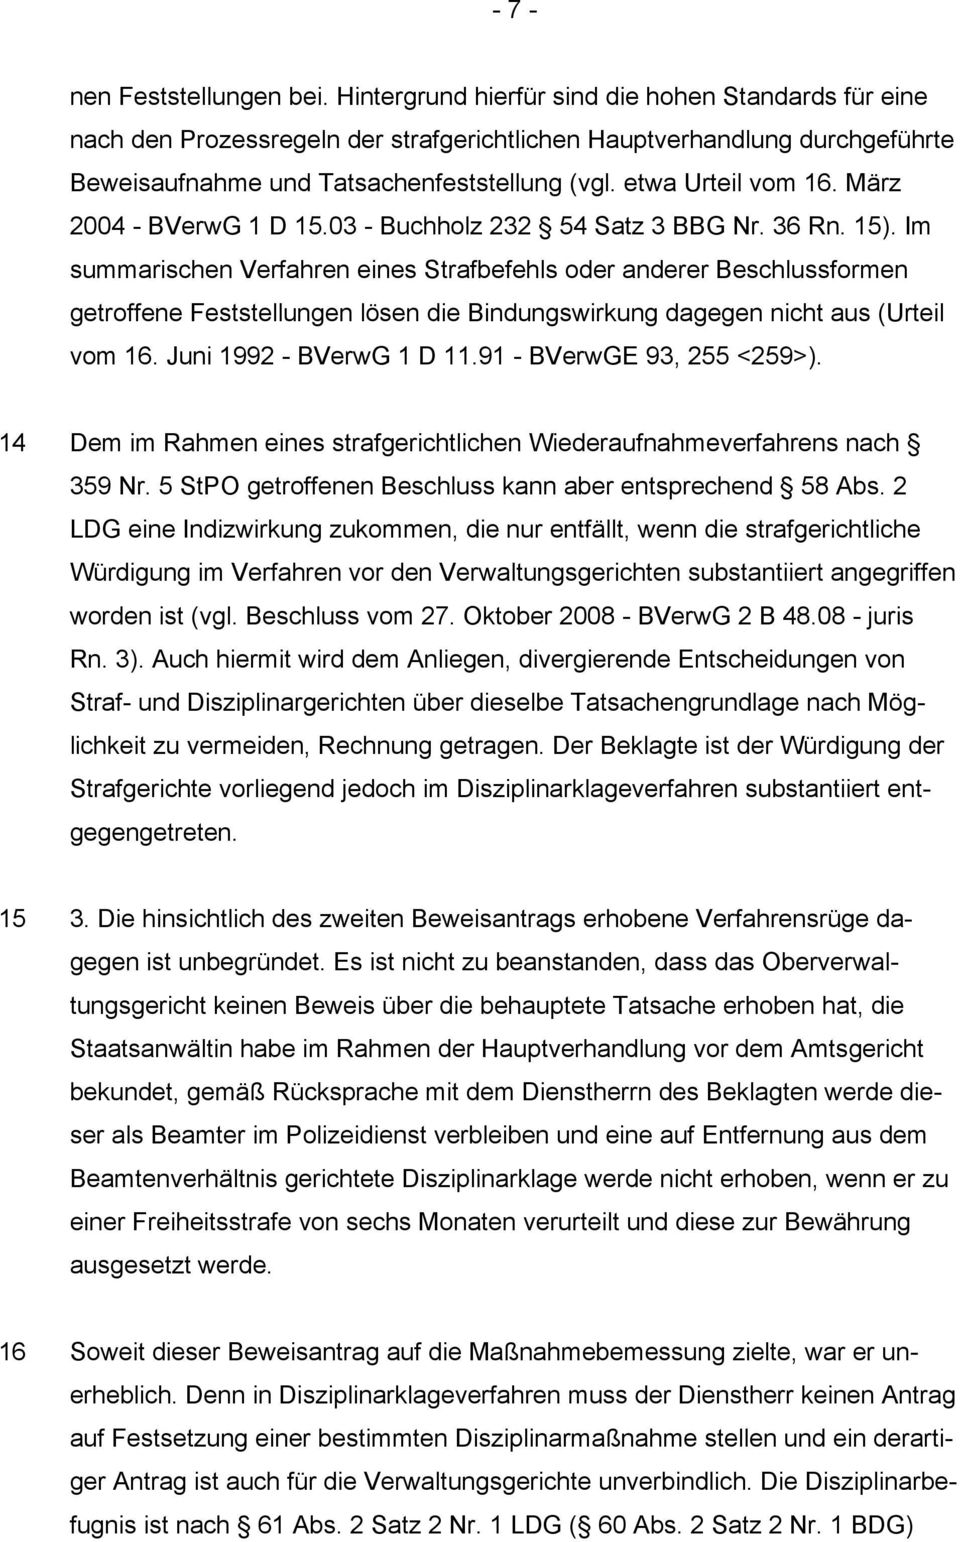 März 2004 - BVerwG 1 D 15.03 - Buchholz 232 54 Satz 3 BBG Nr. 36 Rn. 15).